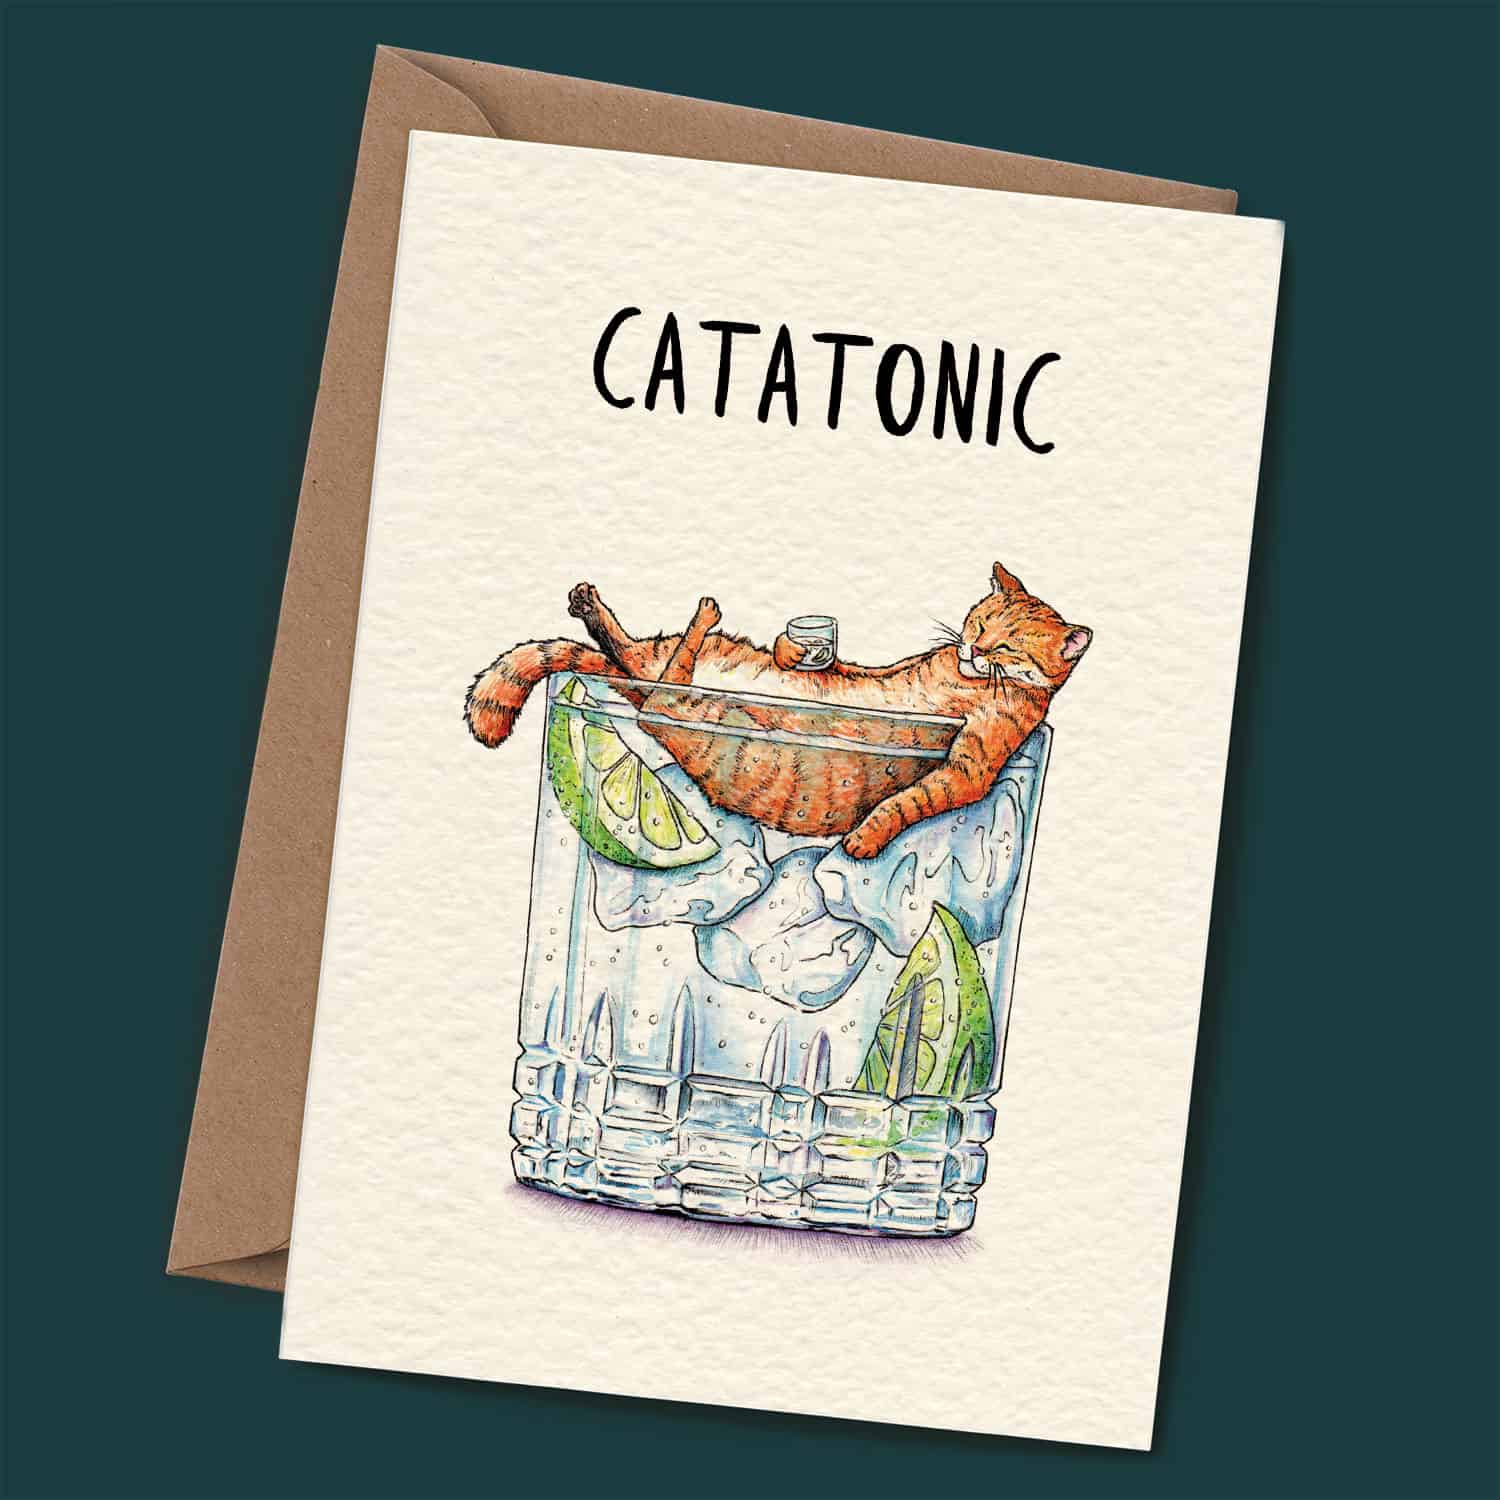 Catatonic Card - Everyday Card: 5" x 7"